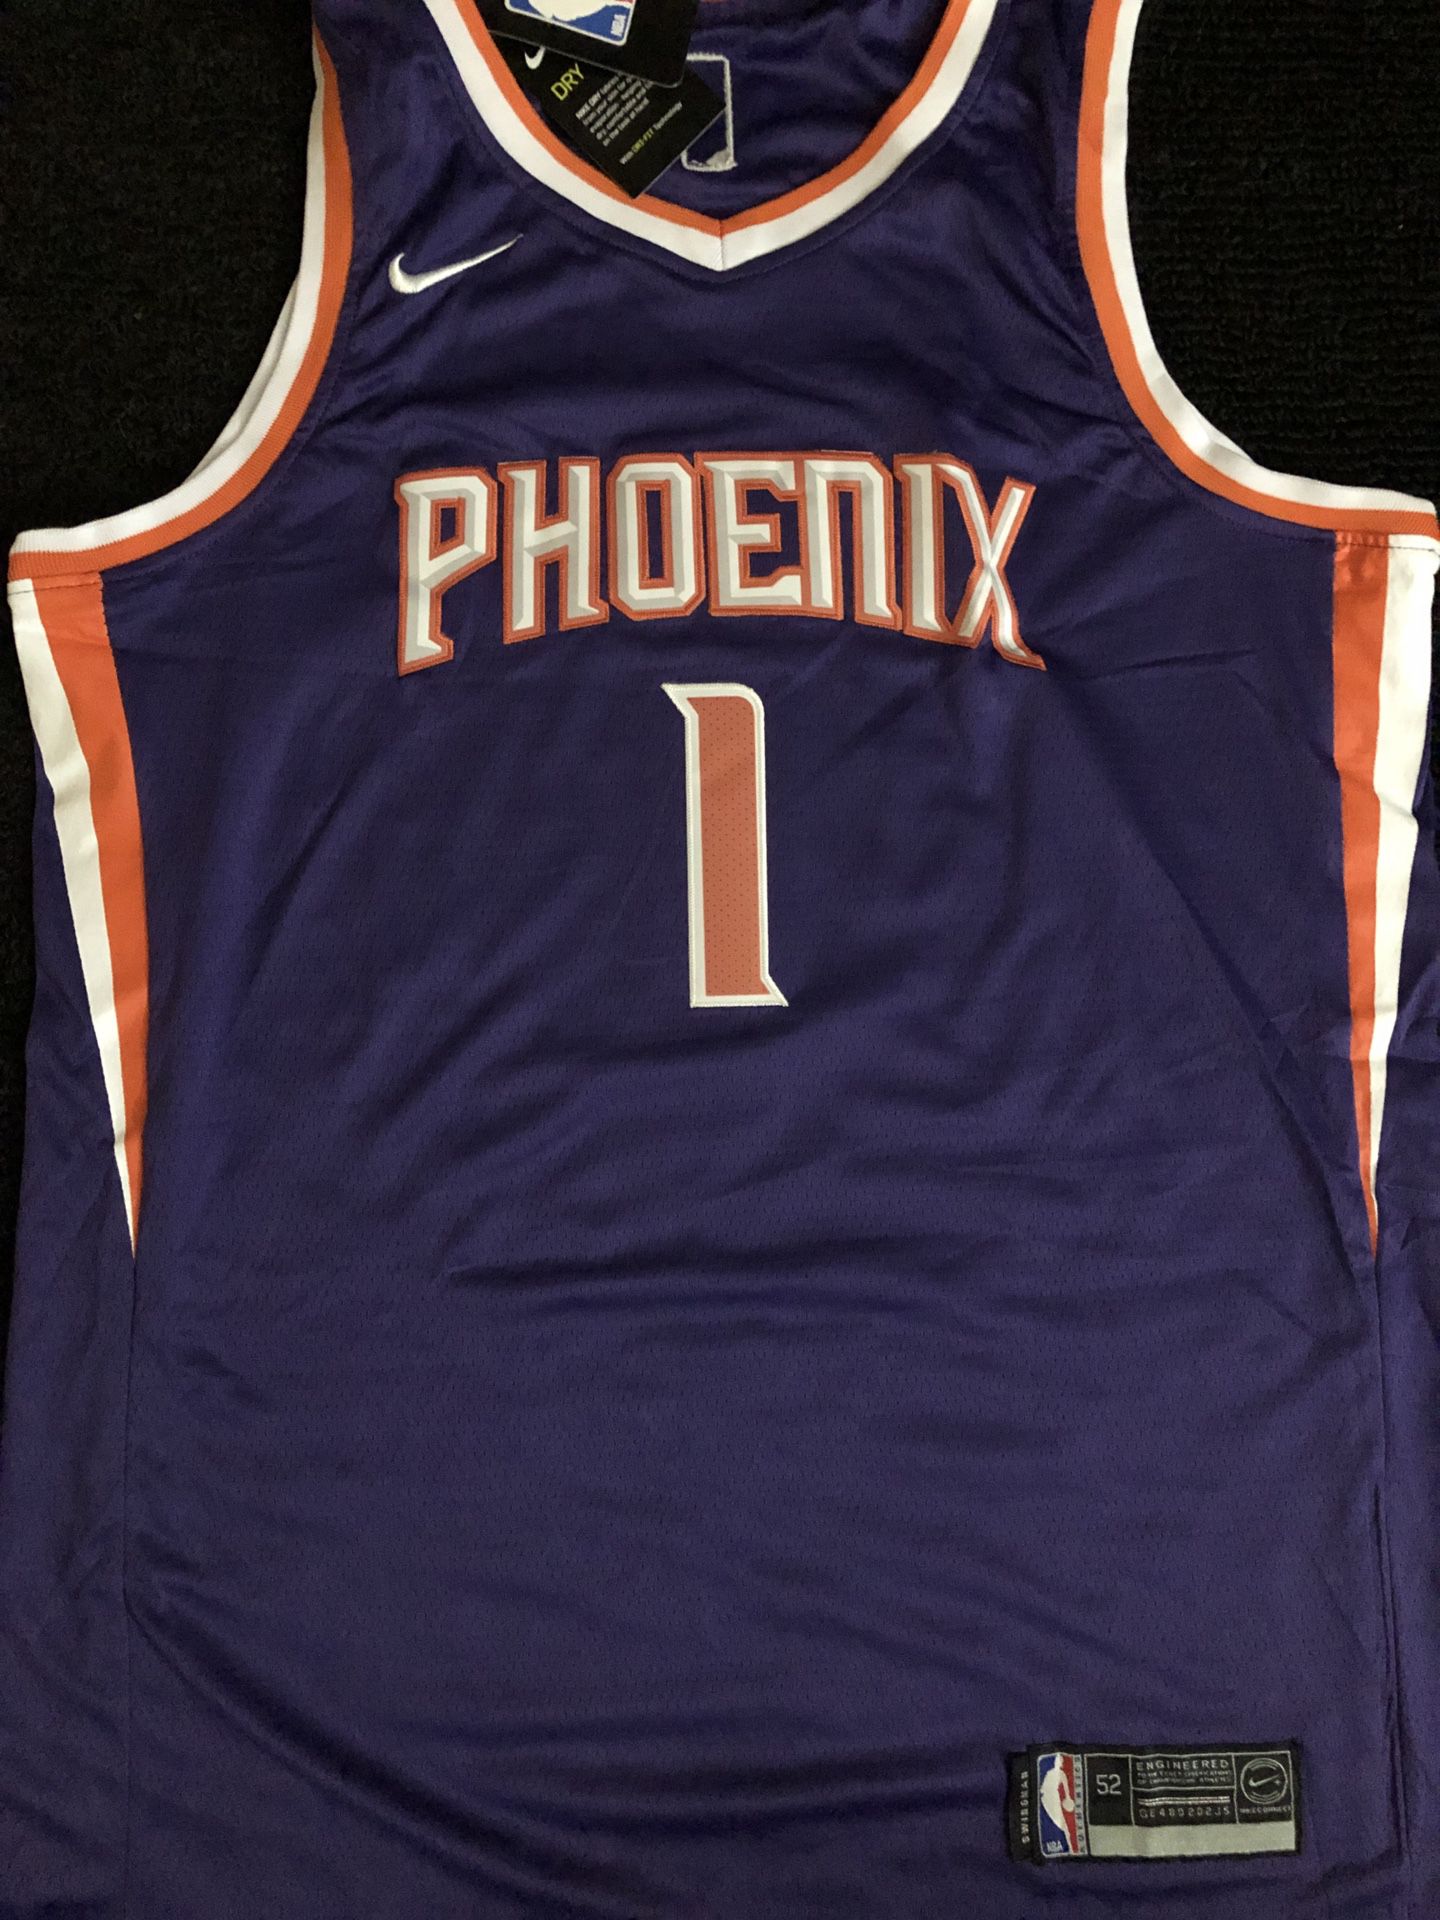 Phoenix Suns Devin Booker Jersey New Men S M L XL XXL for Sale